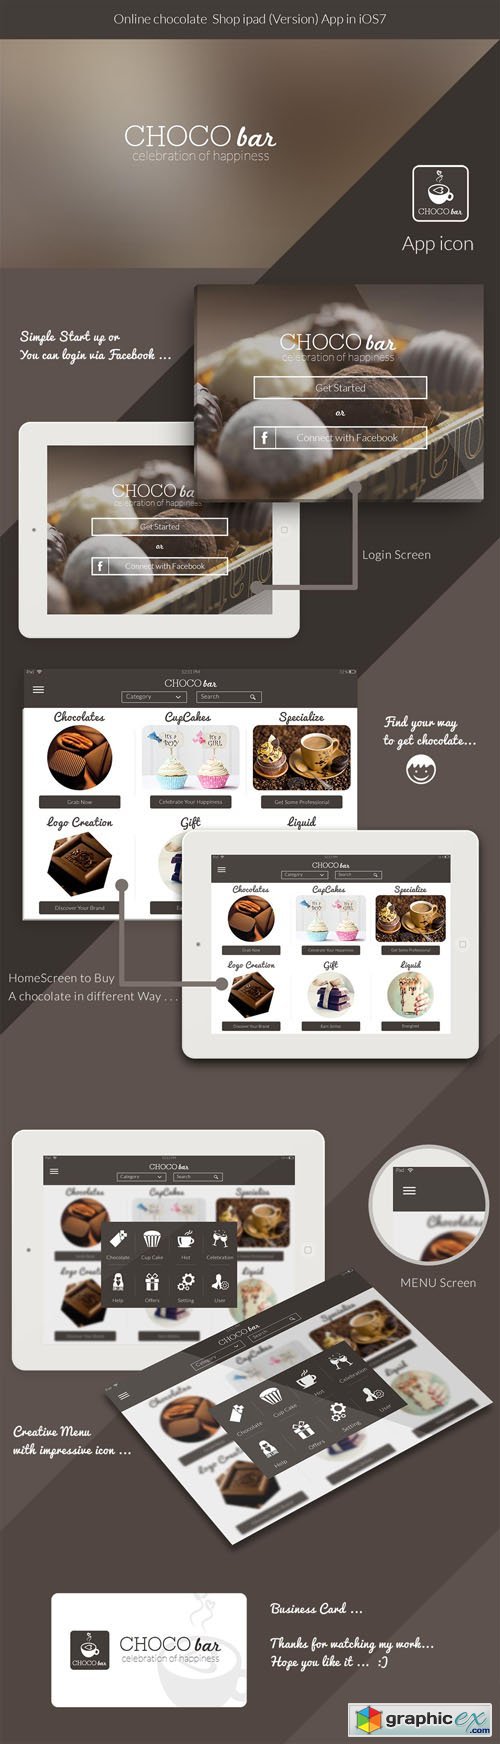 Bakery / CHOCO bar - iPad App UI Kit PSD Template